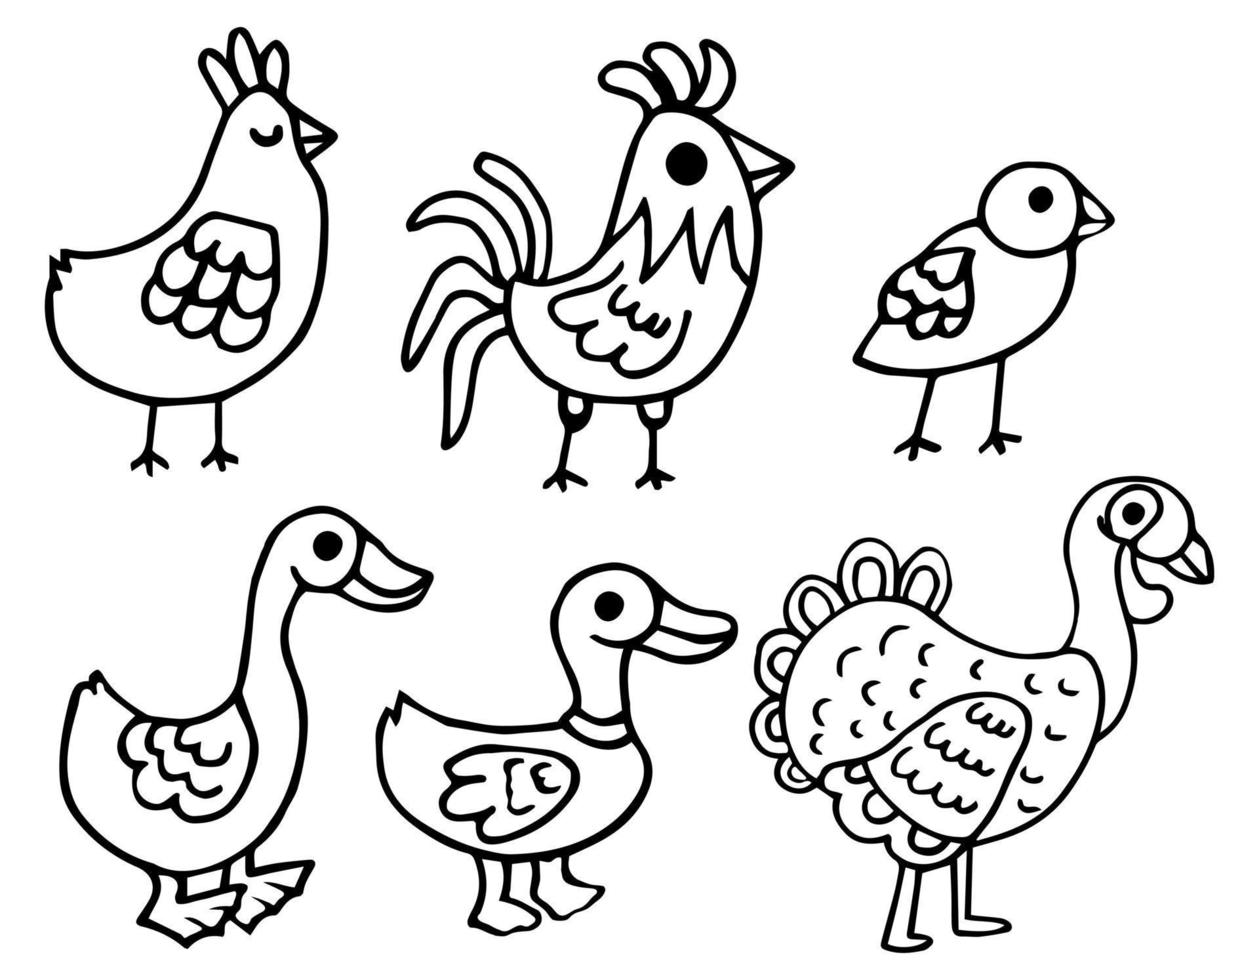 Farm birds animals. Vector stock illustration isolated on white background